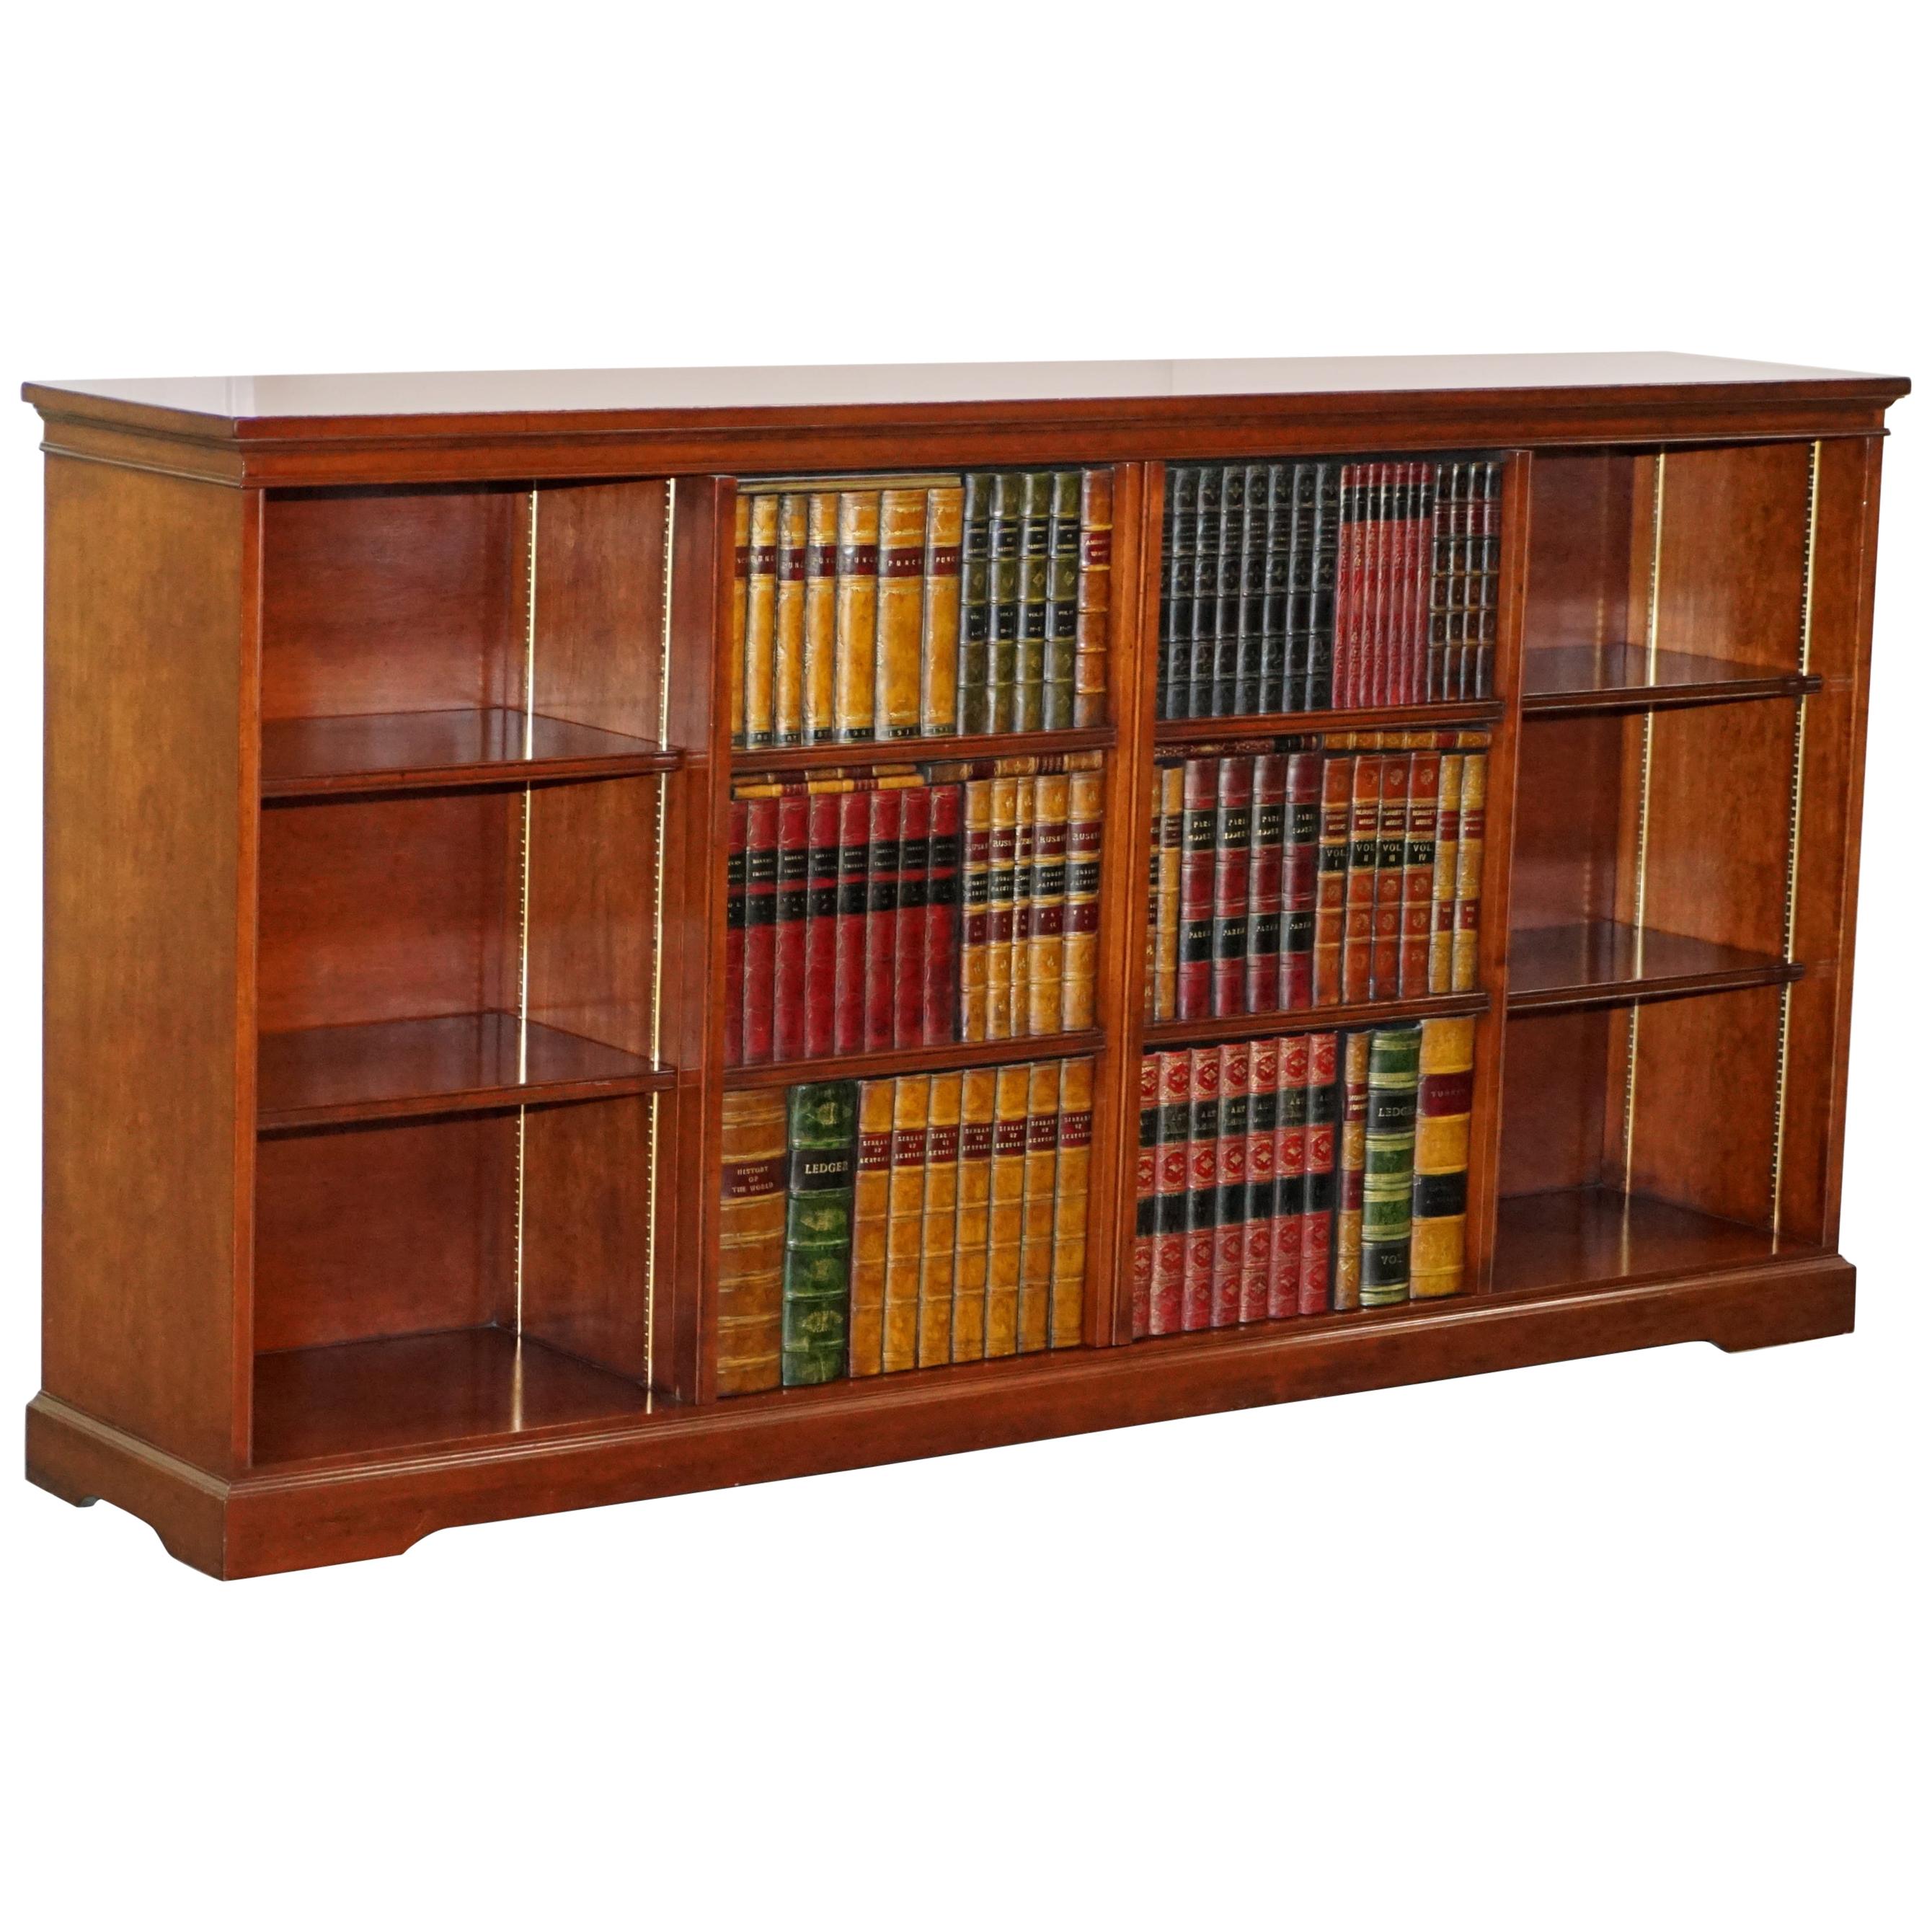 Very Rare Harrods London Kennedy Hardwood Sideboard TV Media Cabinet Faux Books For Sale